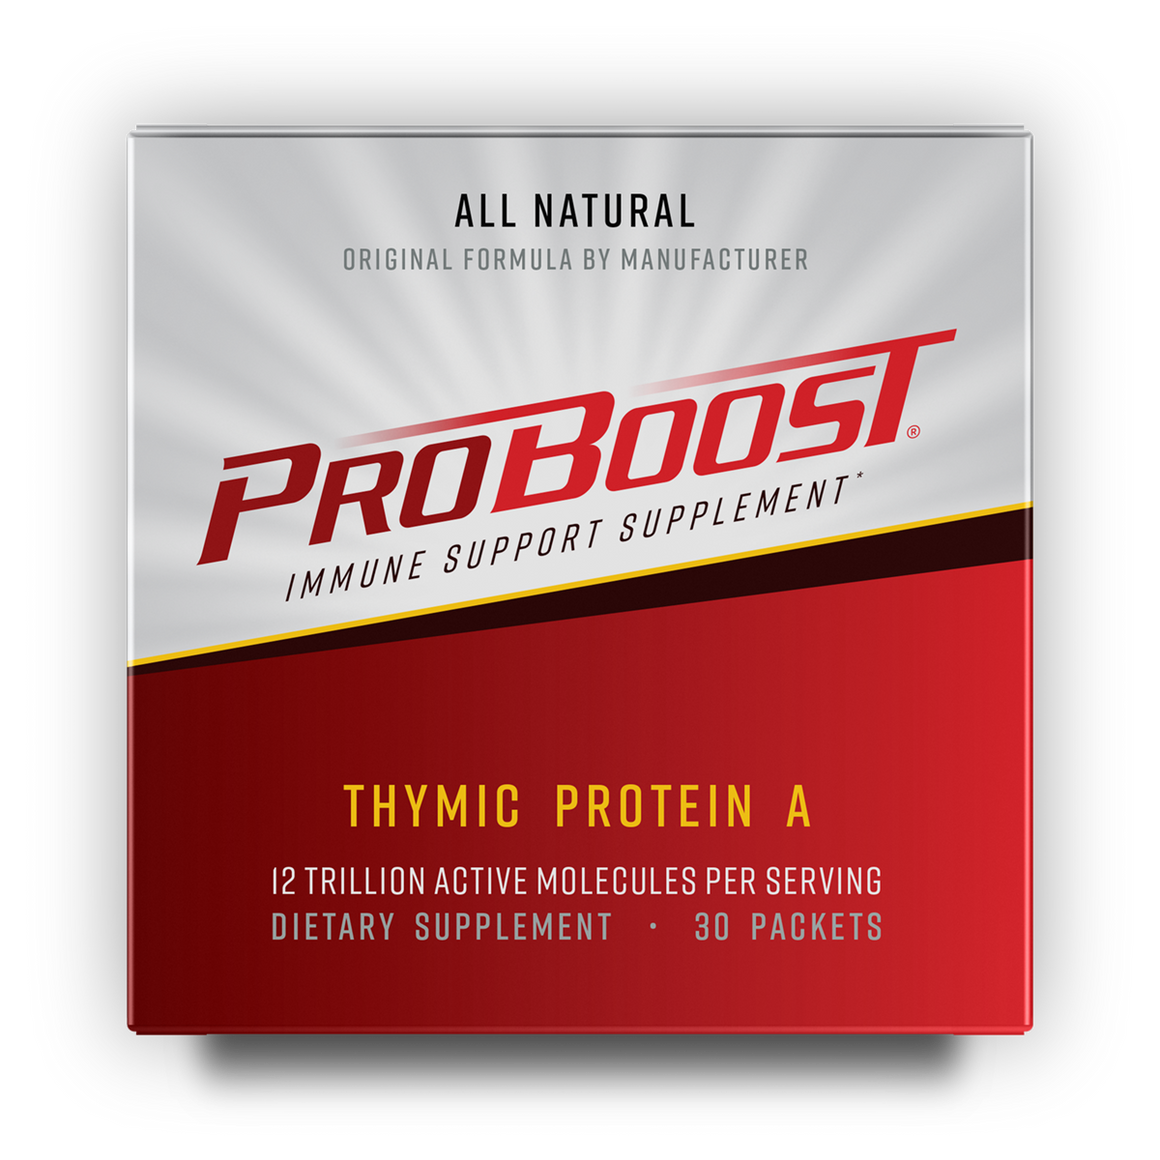 ProBoost® Thymic Protein A